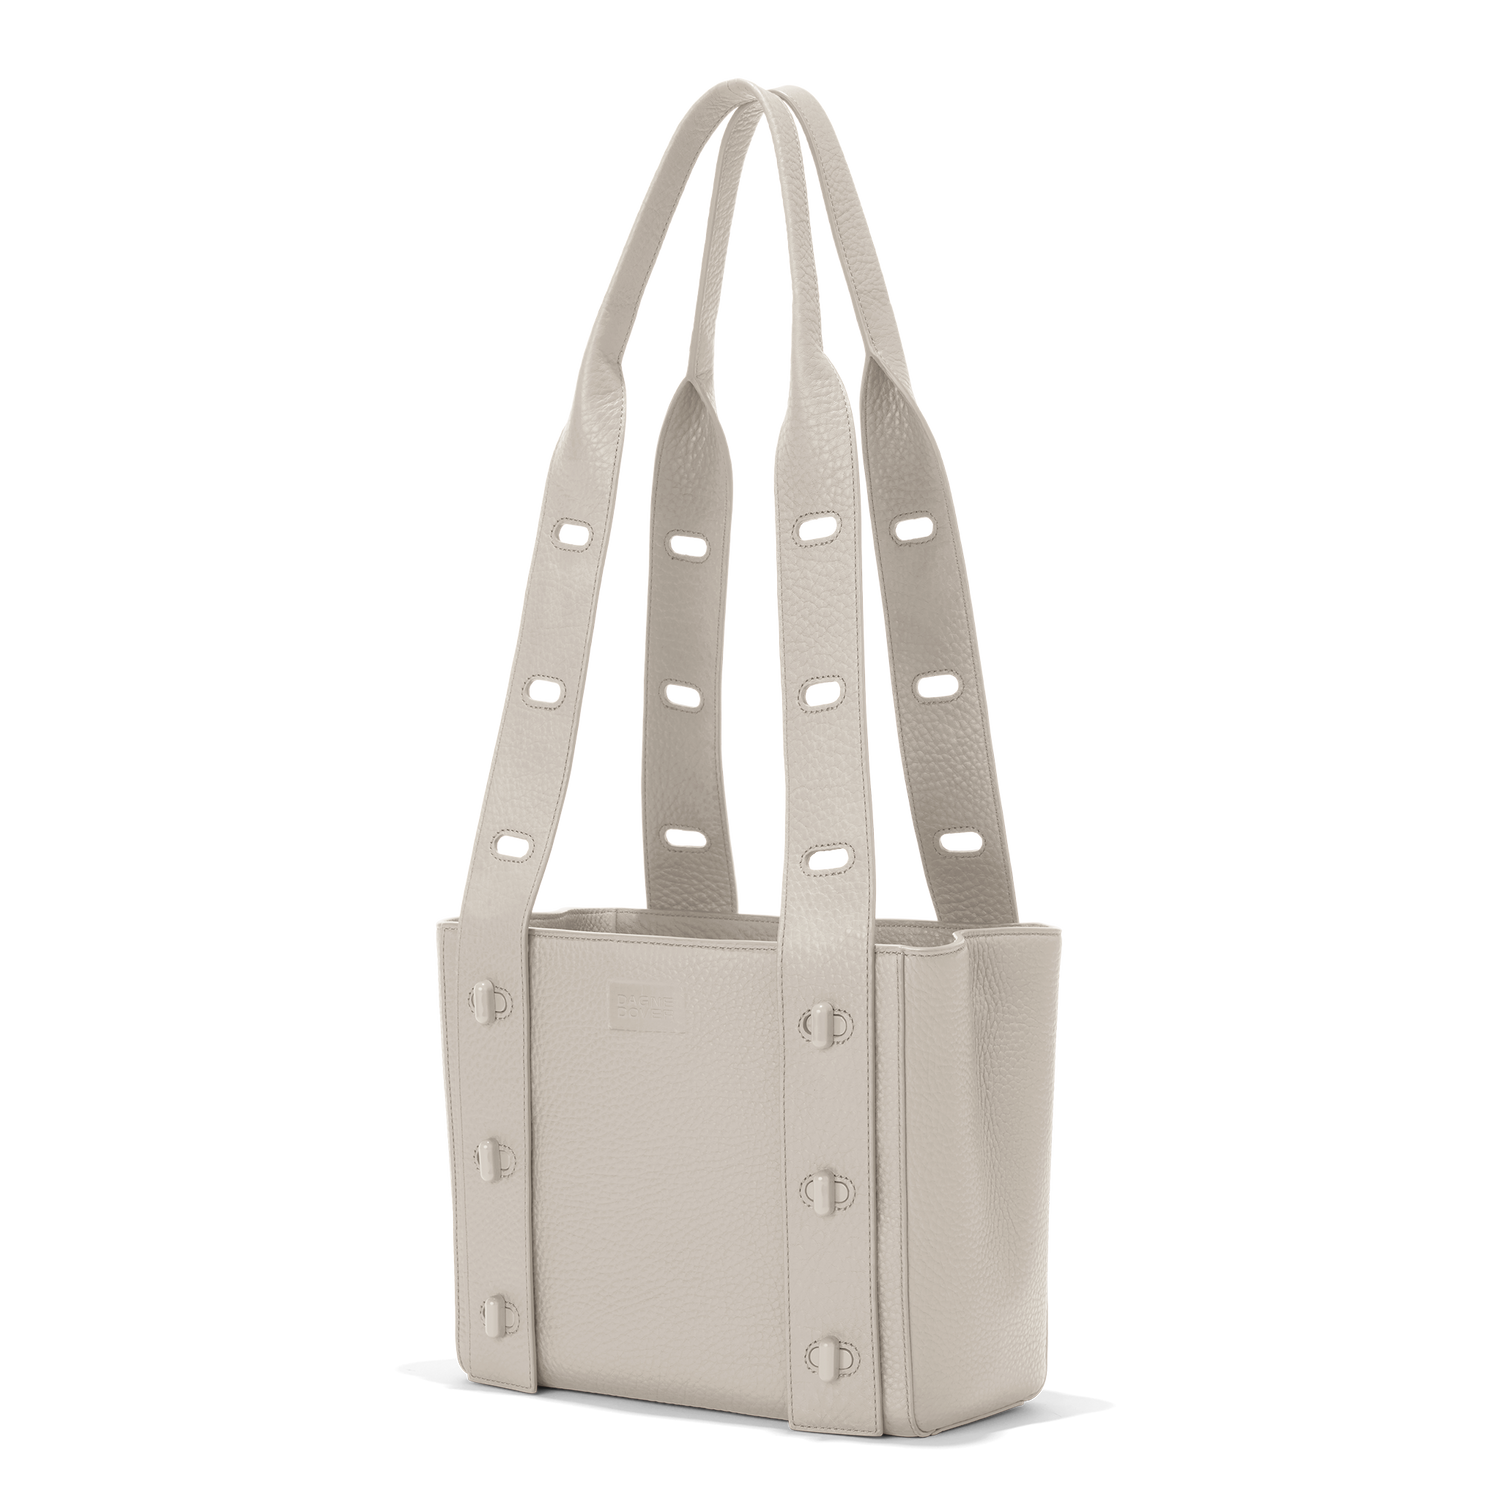 Thoughts on Dagne Dover work/handbag? : r/handbags